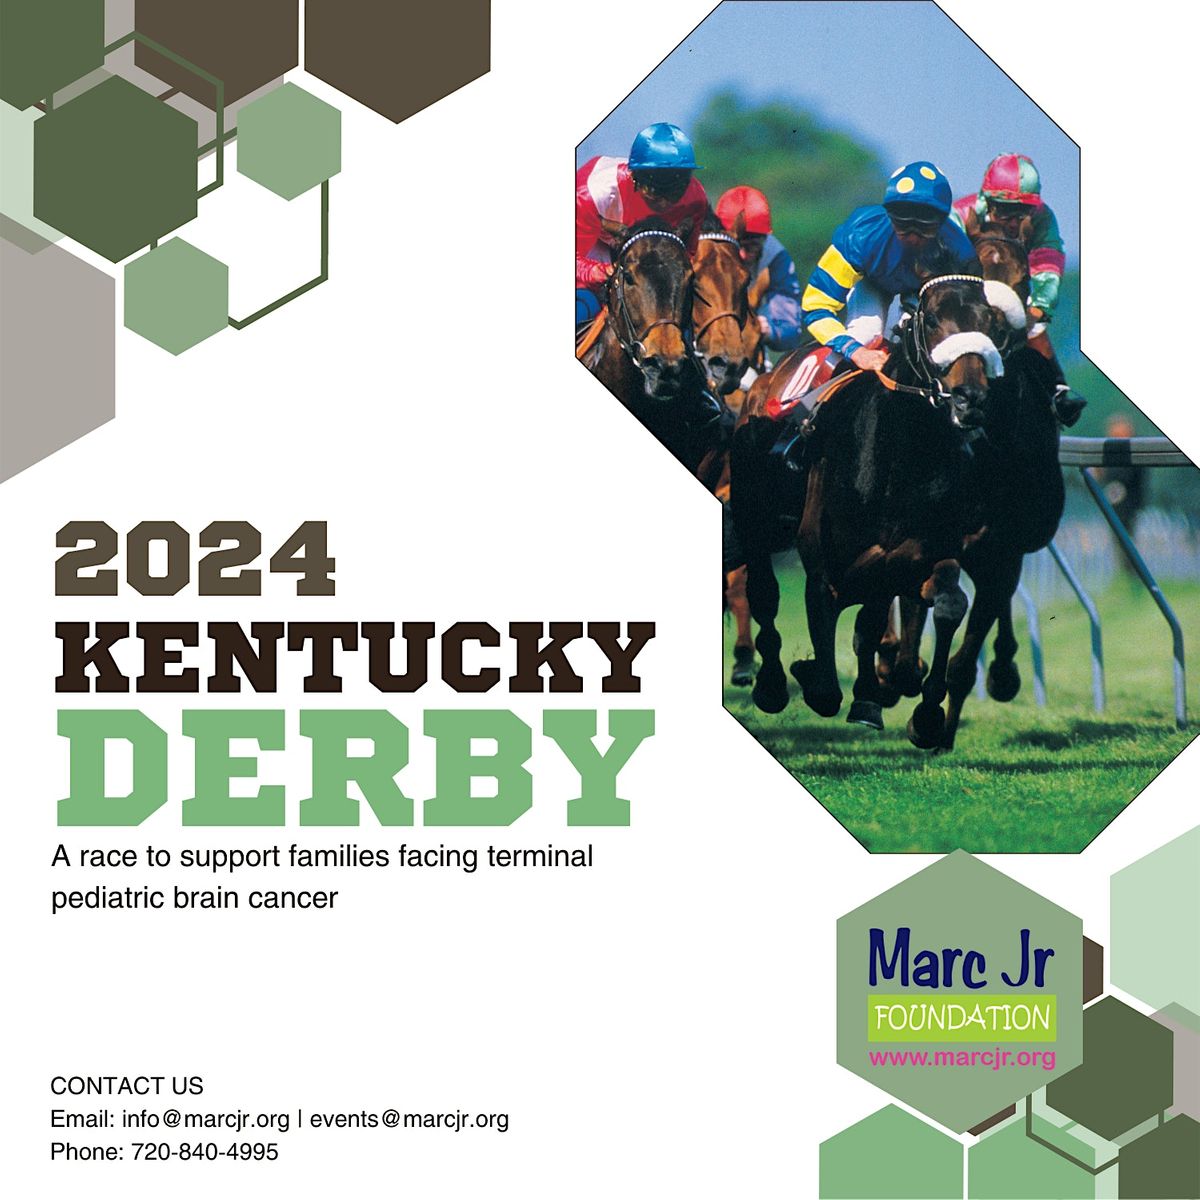 Kentucky Derby Corporate Sponsorship - Marc Jr Foundation